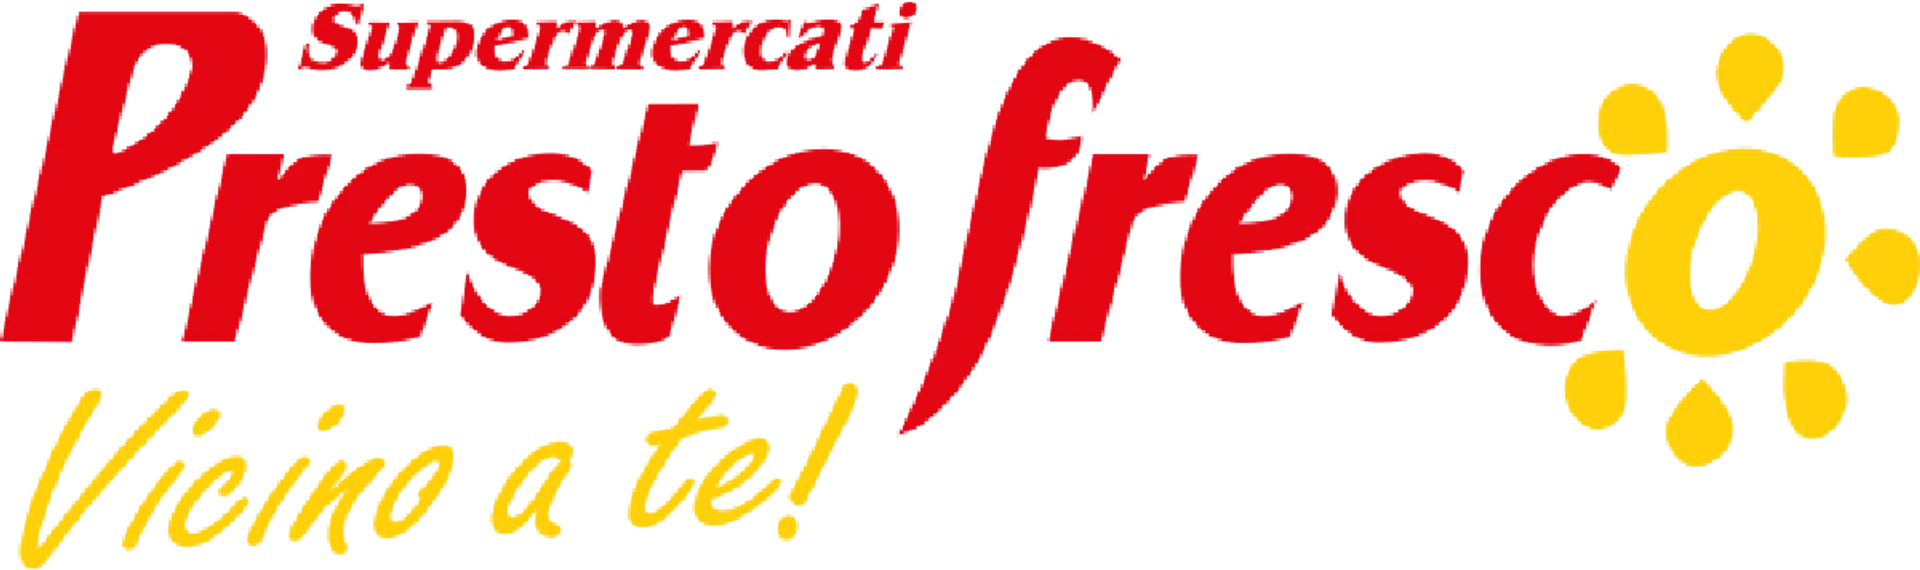 PRESTOFRESCO logo